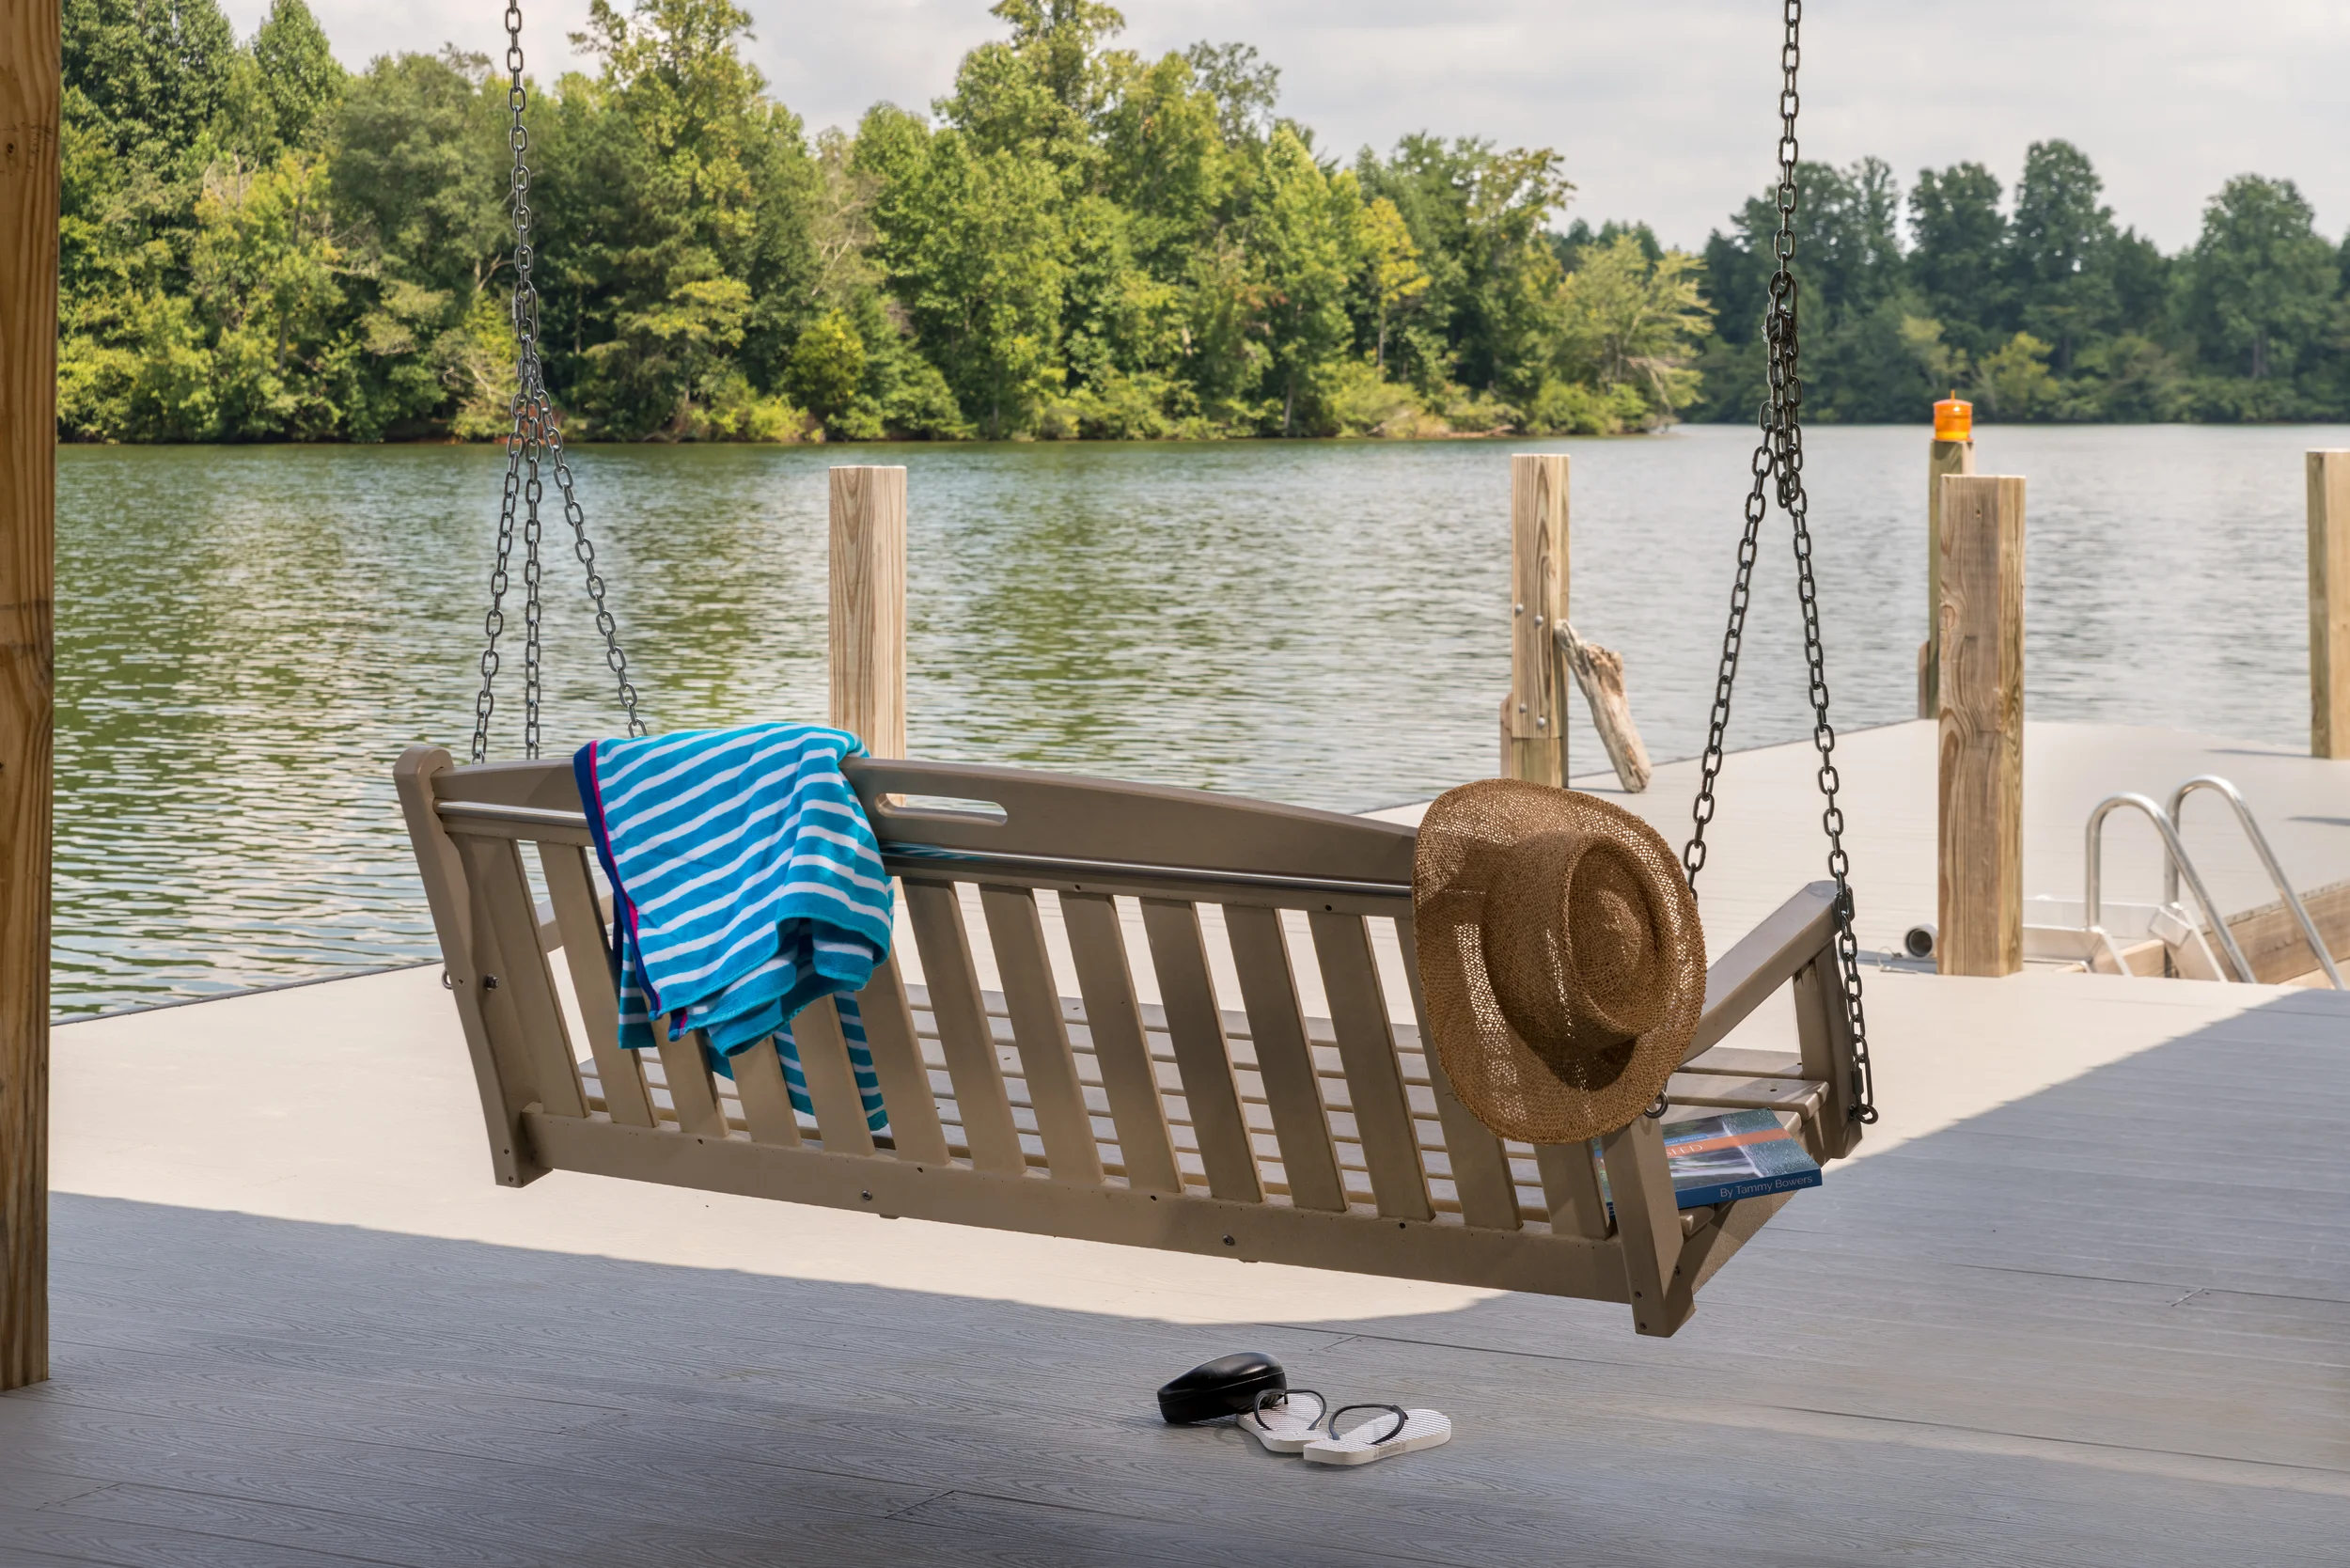 Dock swing bench in Soddy Daisy, Tennessee